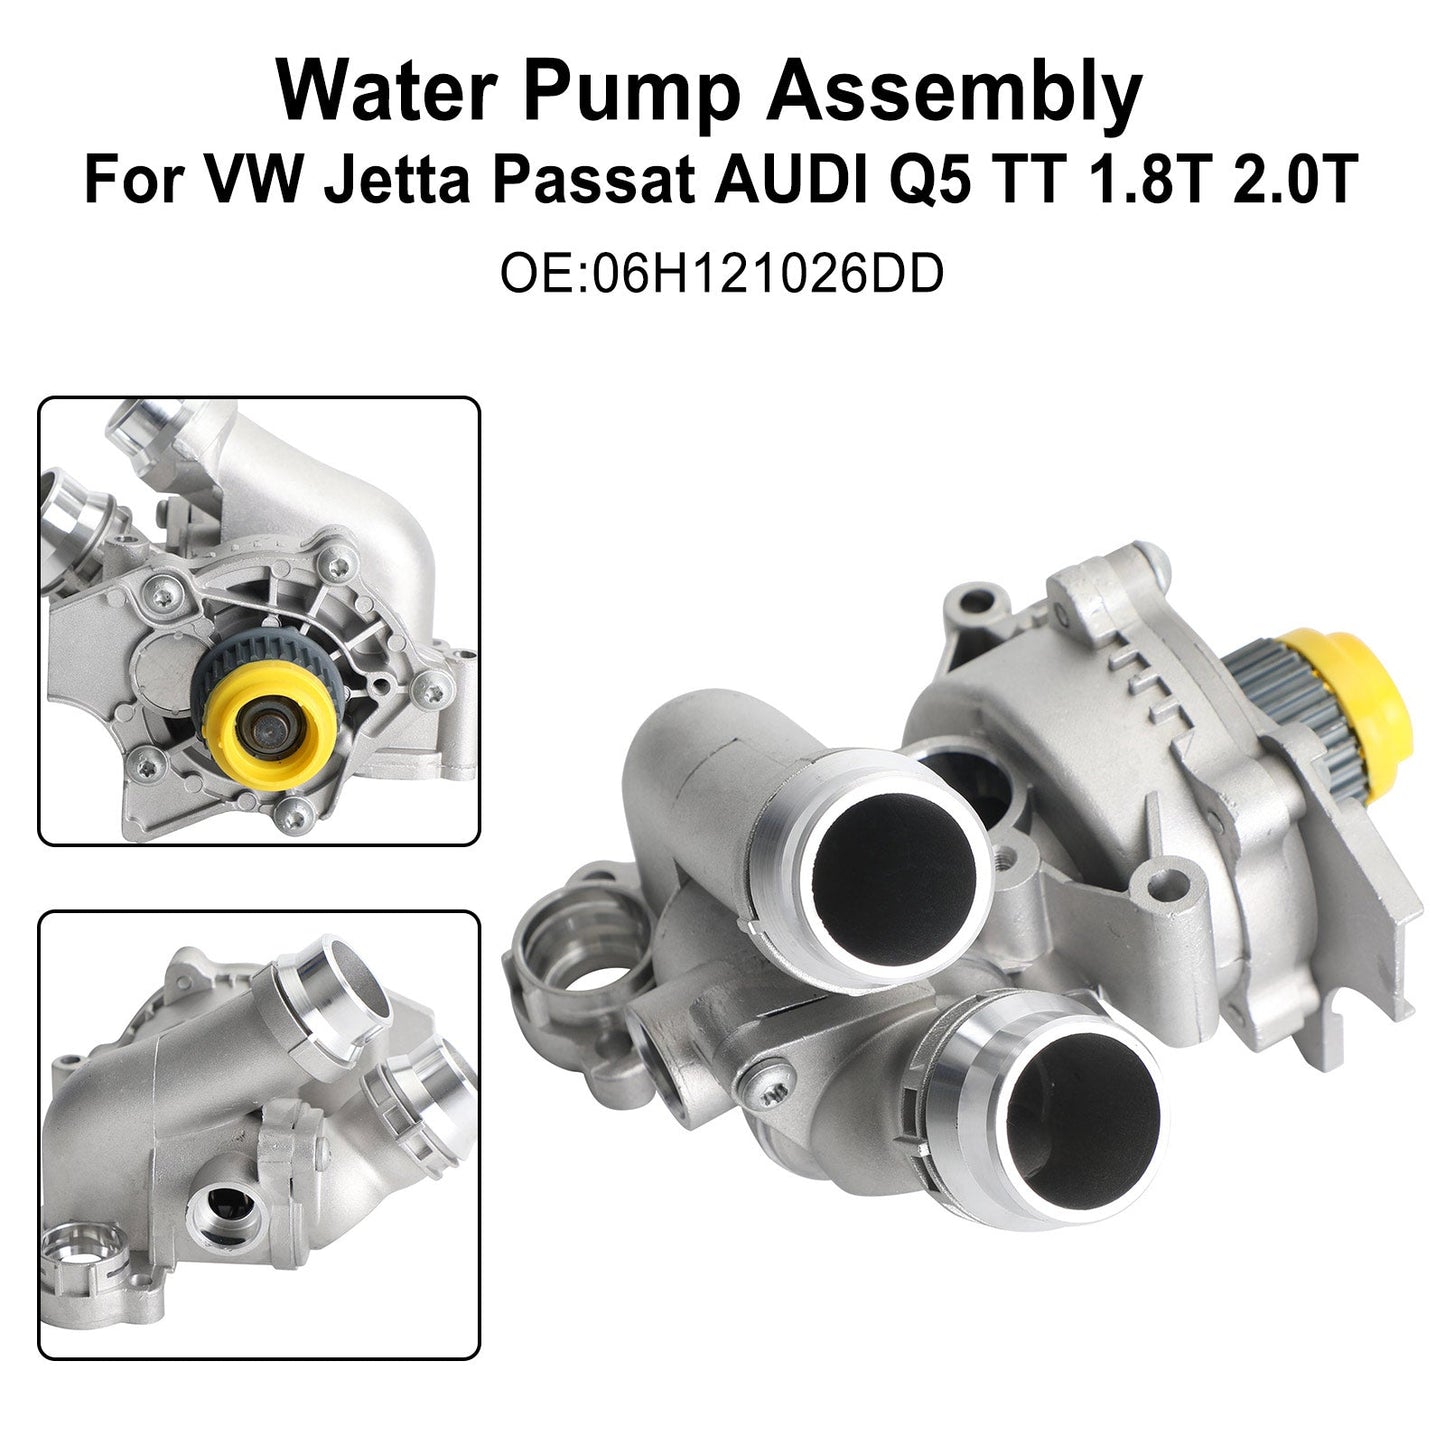 Wasserpumpenbaugruppe für VW Jetta Passat AUDI Q5 TT 1.8T 2.0T 06H121026DD Generic